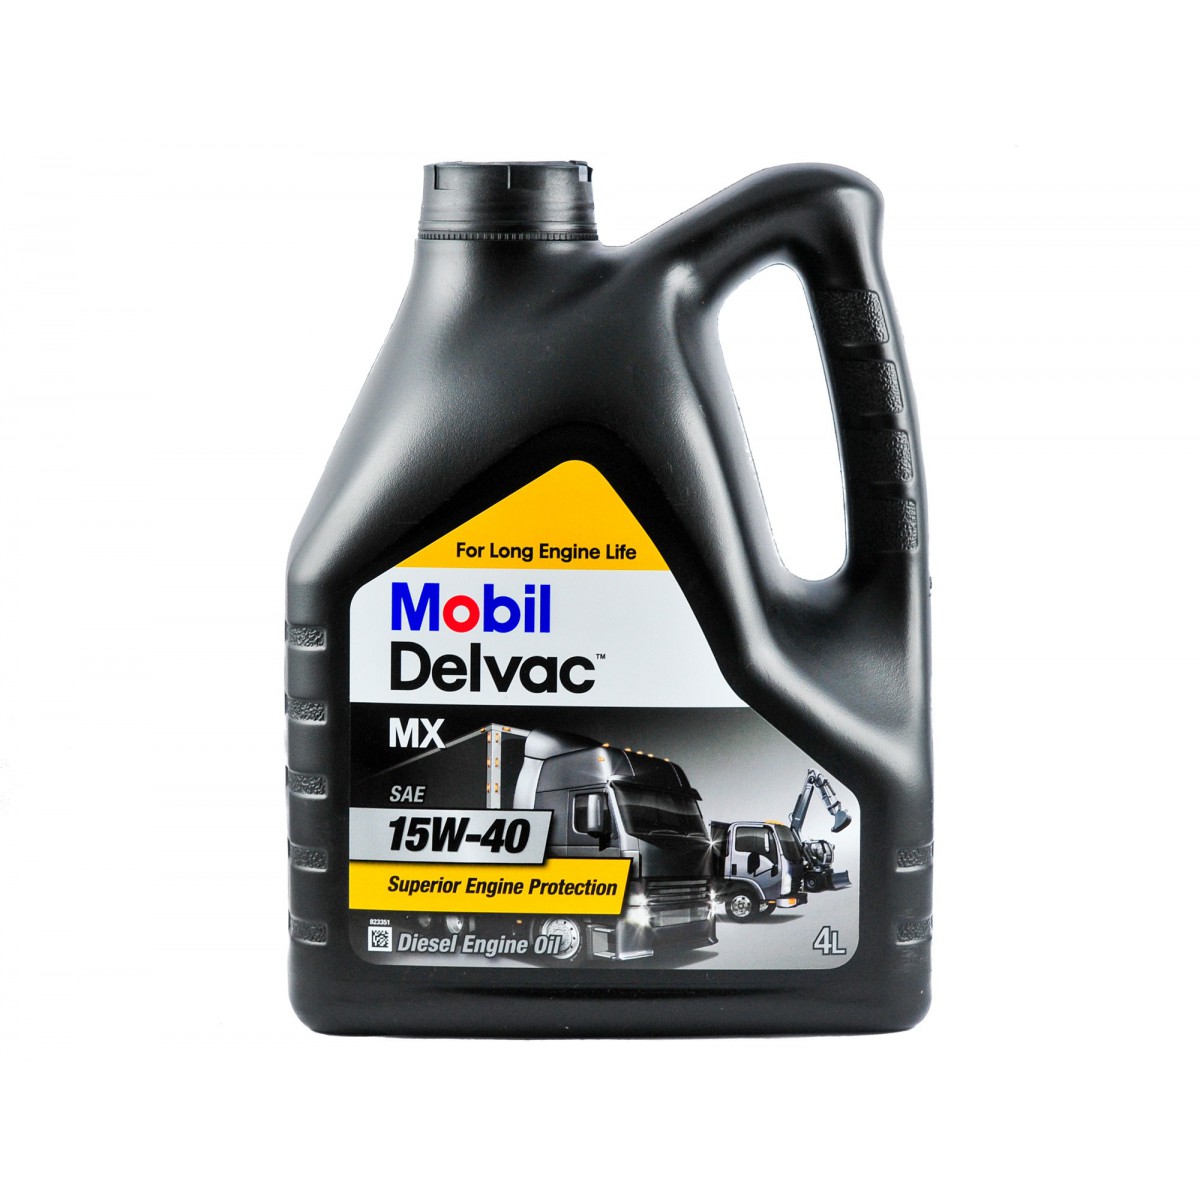 Motor oil for diesel engines Mobil Delvac MX 15W-40